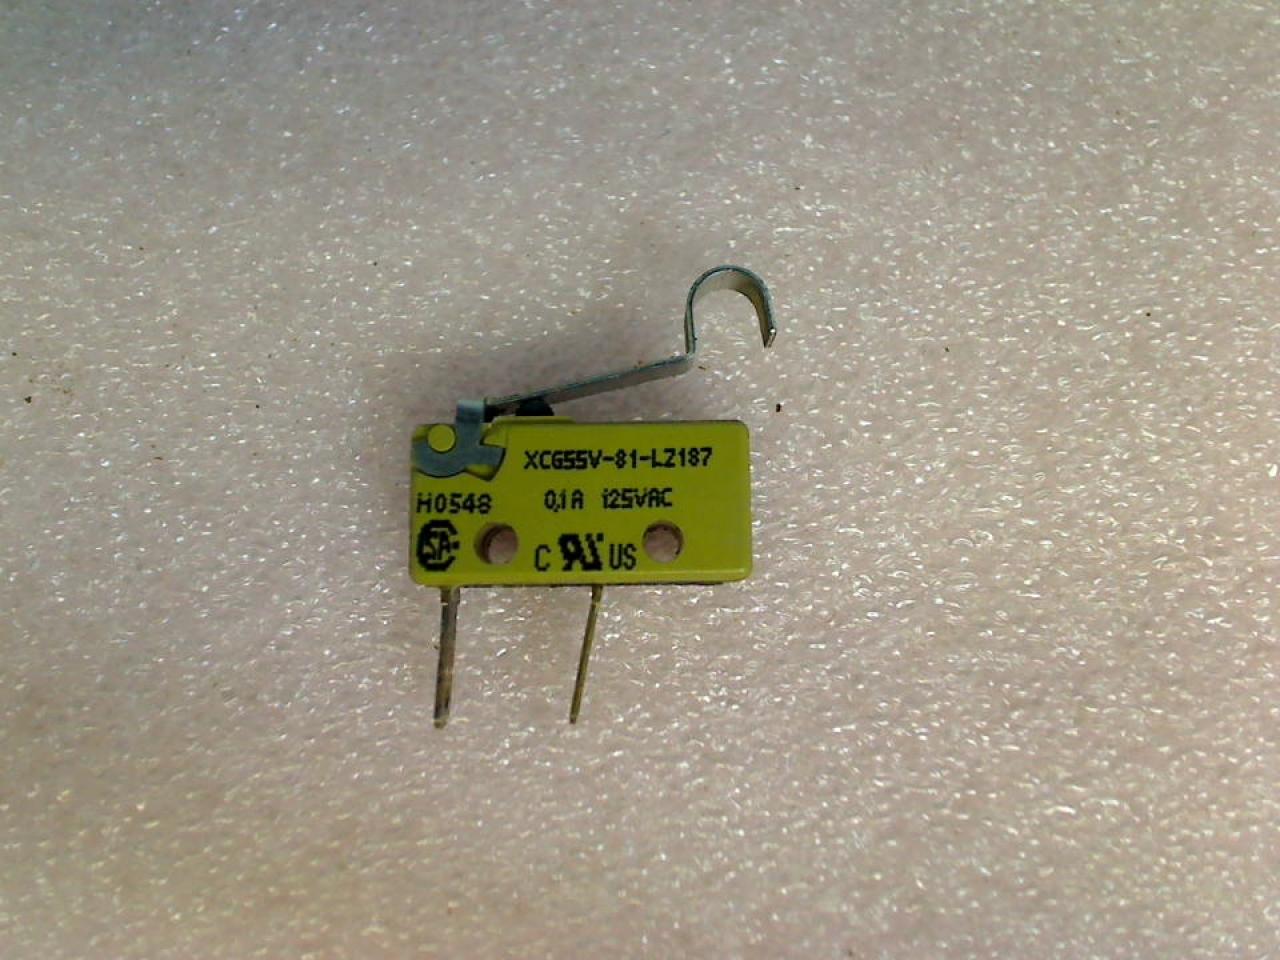 Micro Switch Sensor Schalter XCG55V-81-LZ187 Siemens Surpresso S65